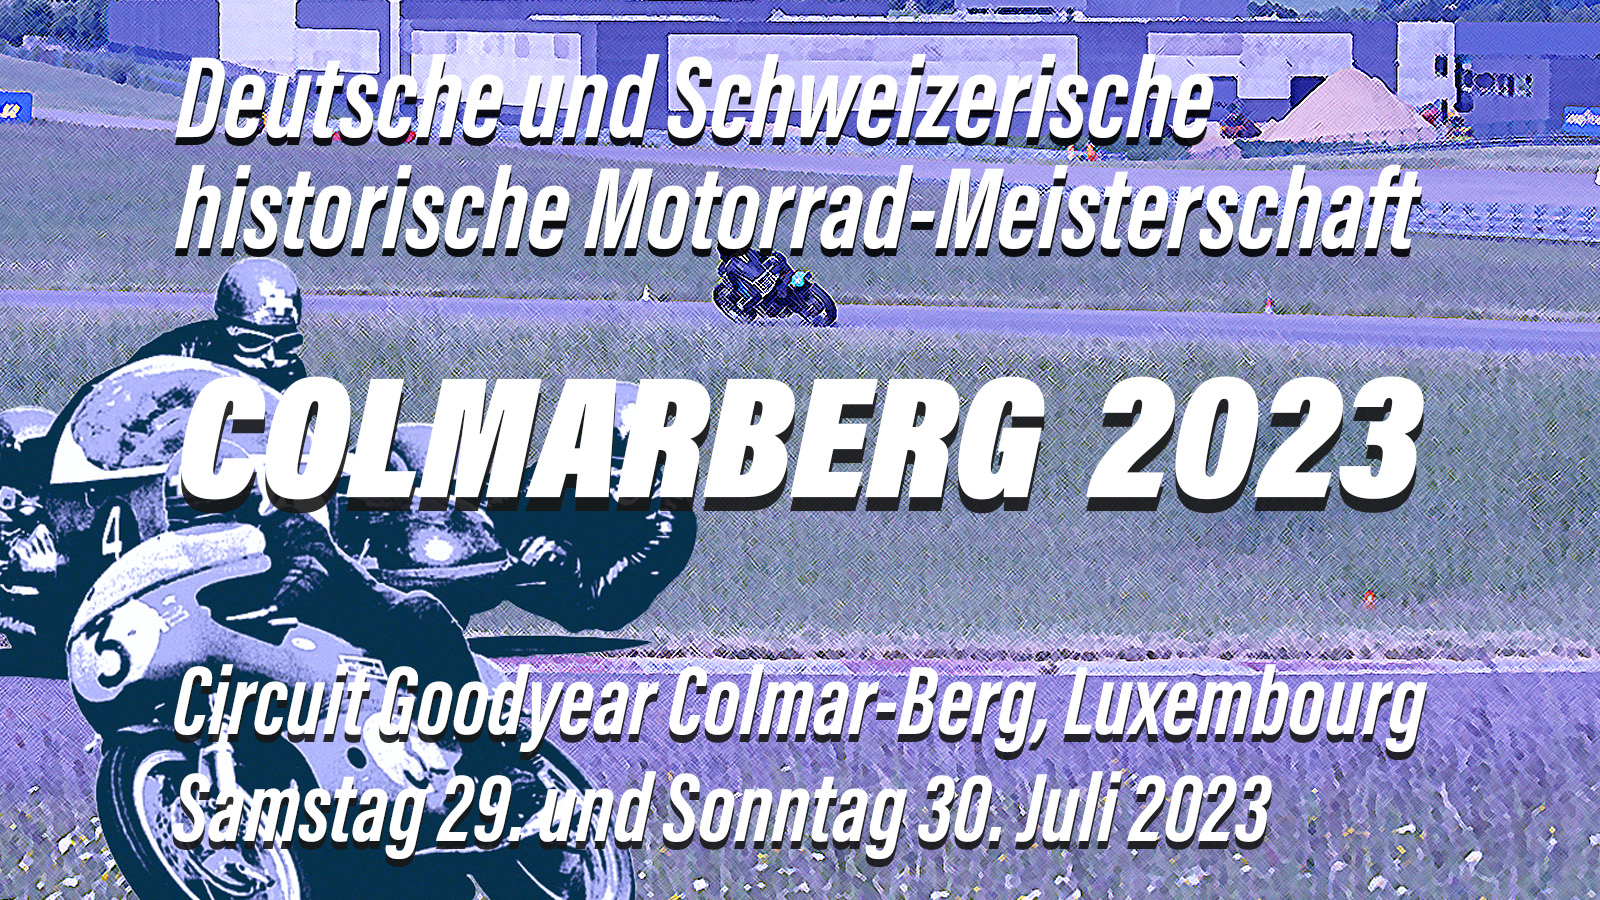 Abb 0001 Colmarberg 2023 front